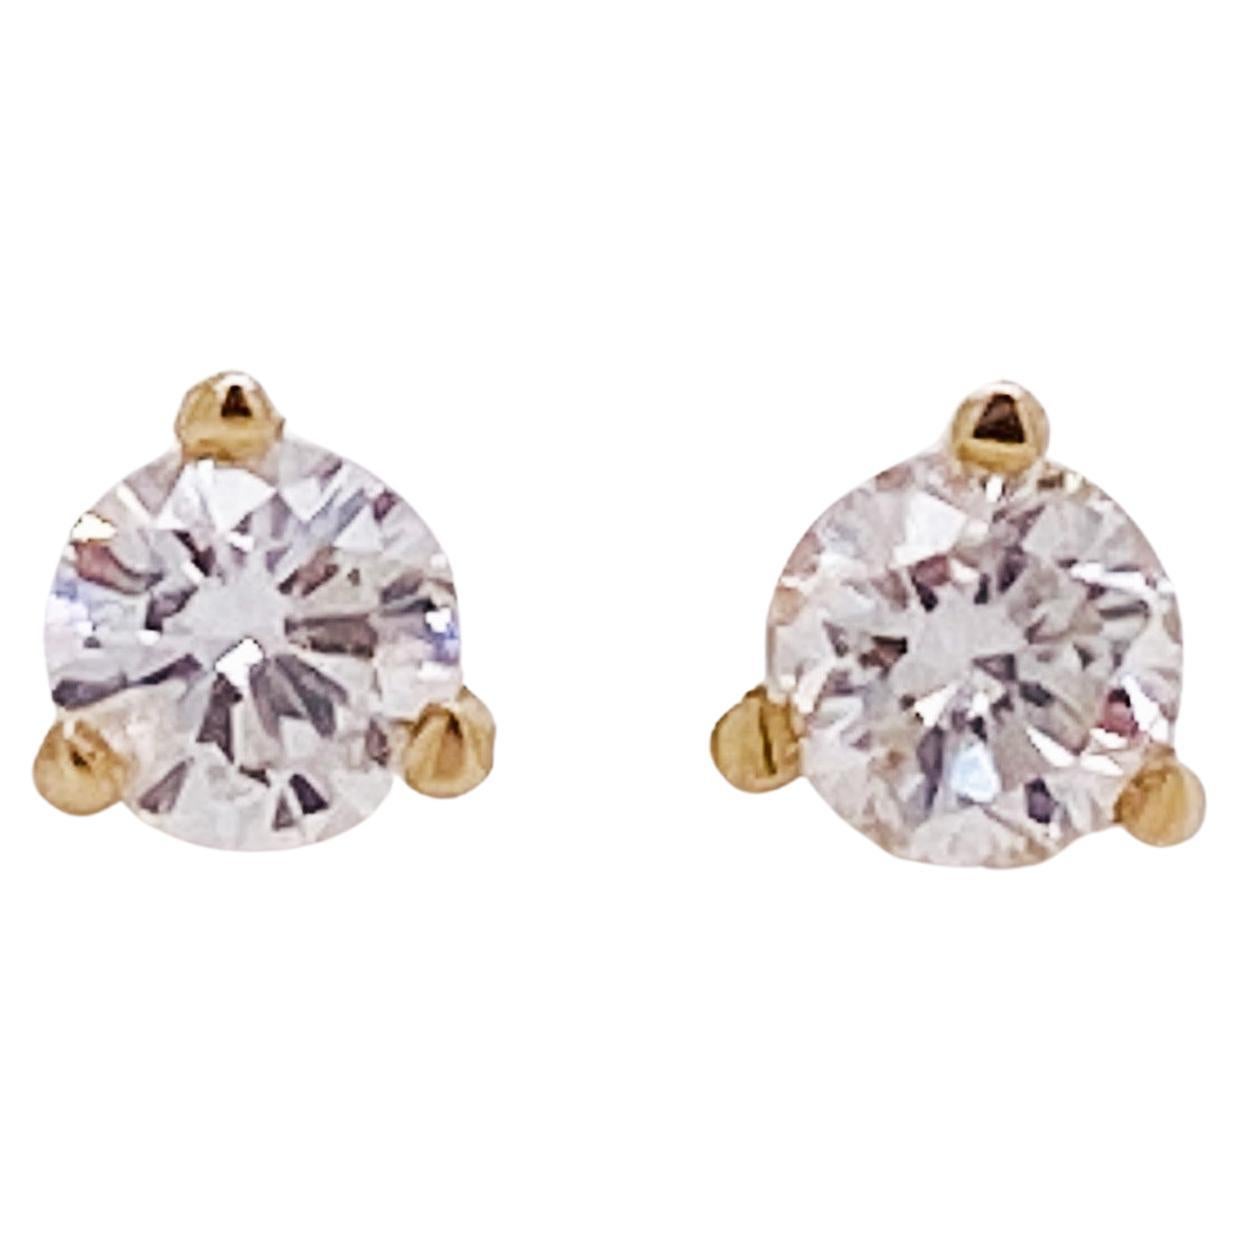 Petite Martini Diamond Stud Earrings .20 Carats in 14k Yellow/White/Rose Gold LV